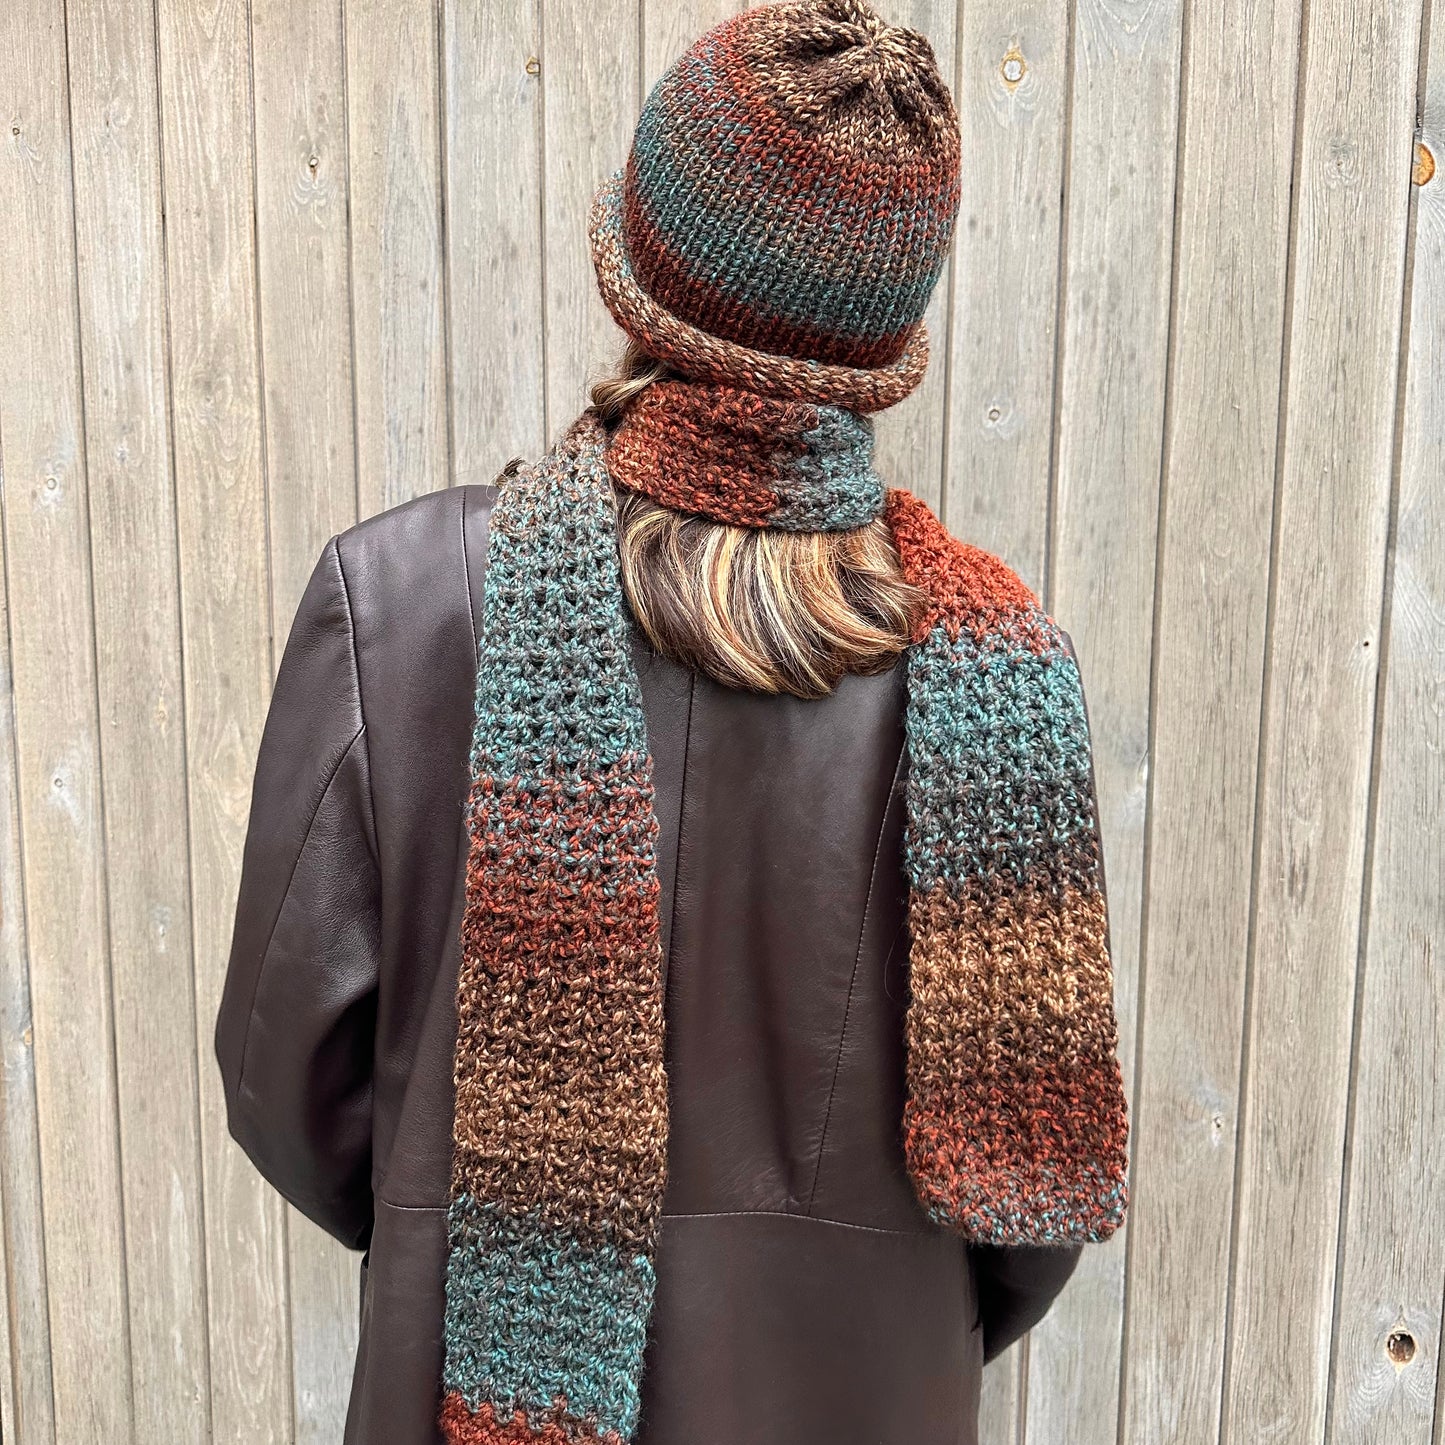 Handmade ombré brown and blue crochet scarf